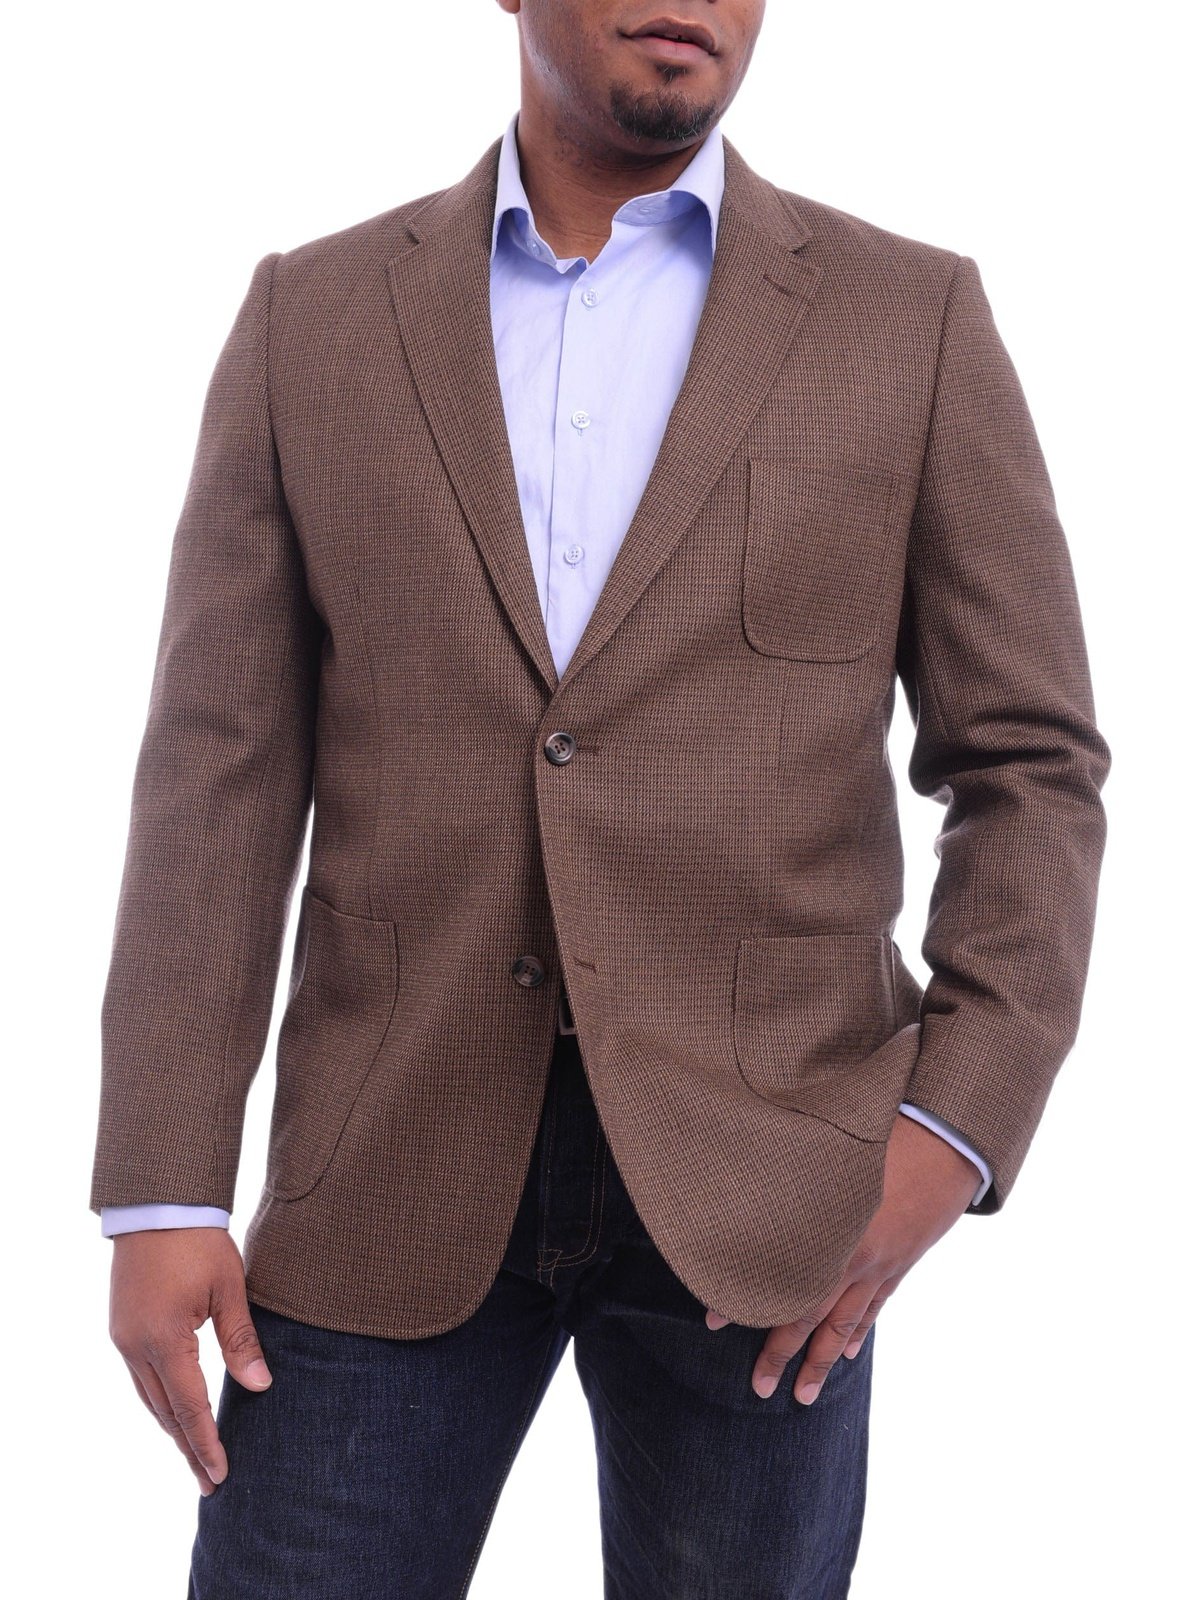 Prontomoda BLAZERS Prontomoda Classic Fit Brown Textured Lambs Wool Blazer Sportcoat Patch Pockets